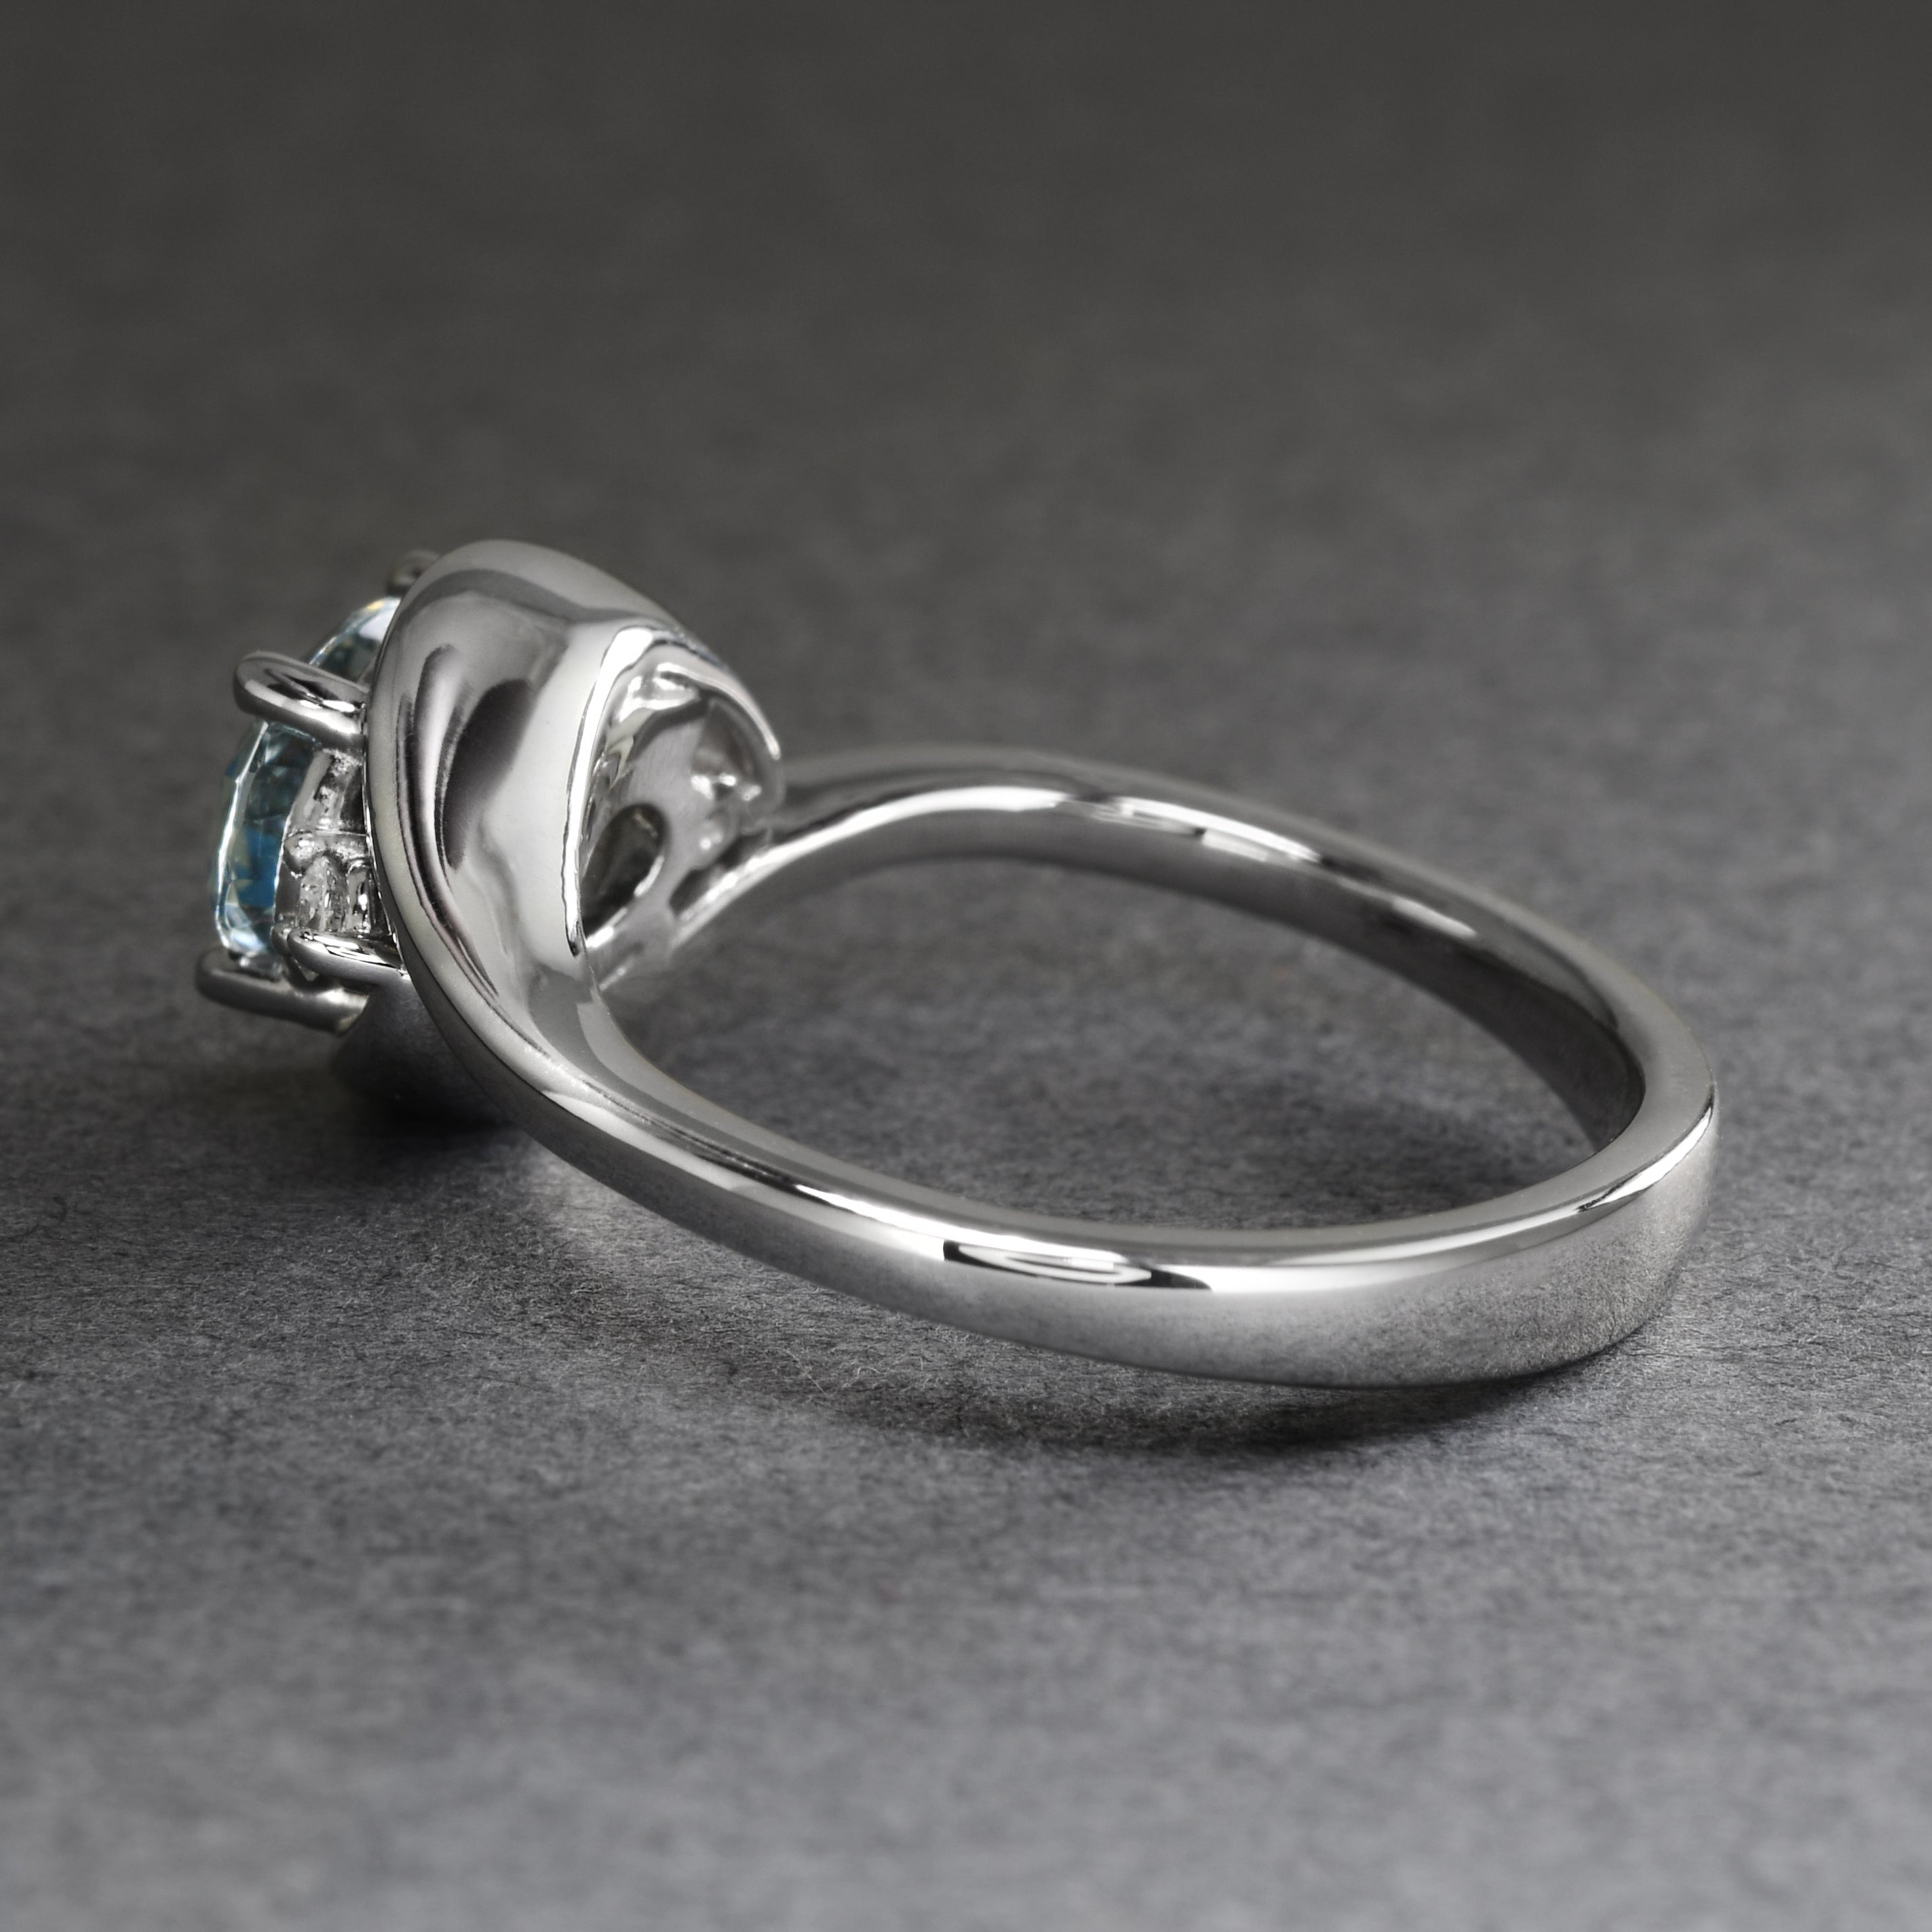 Rings - Diamond / Gold / Gemstone Rings at Plante Jewelers